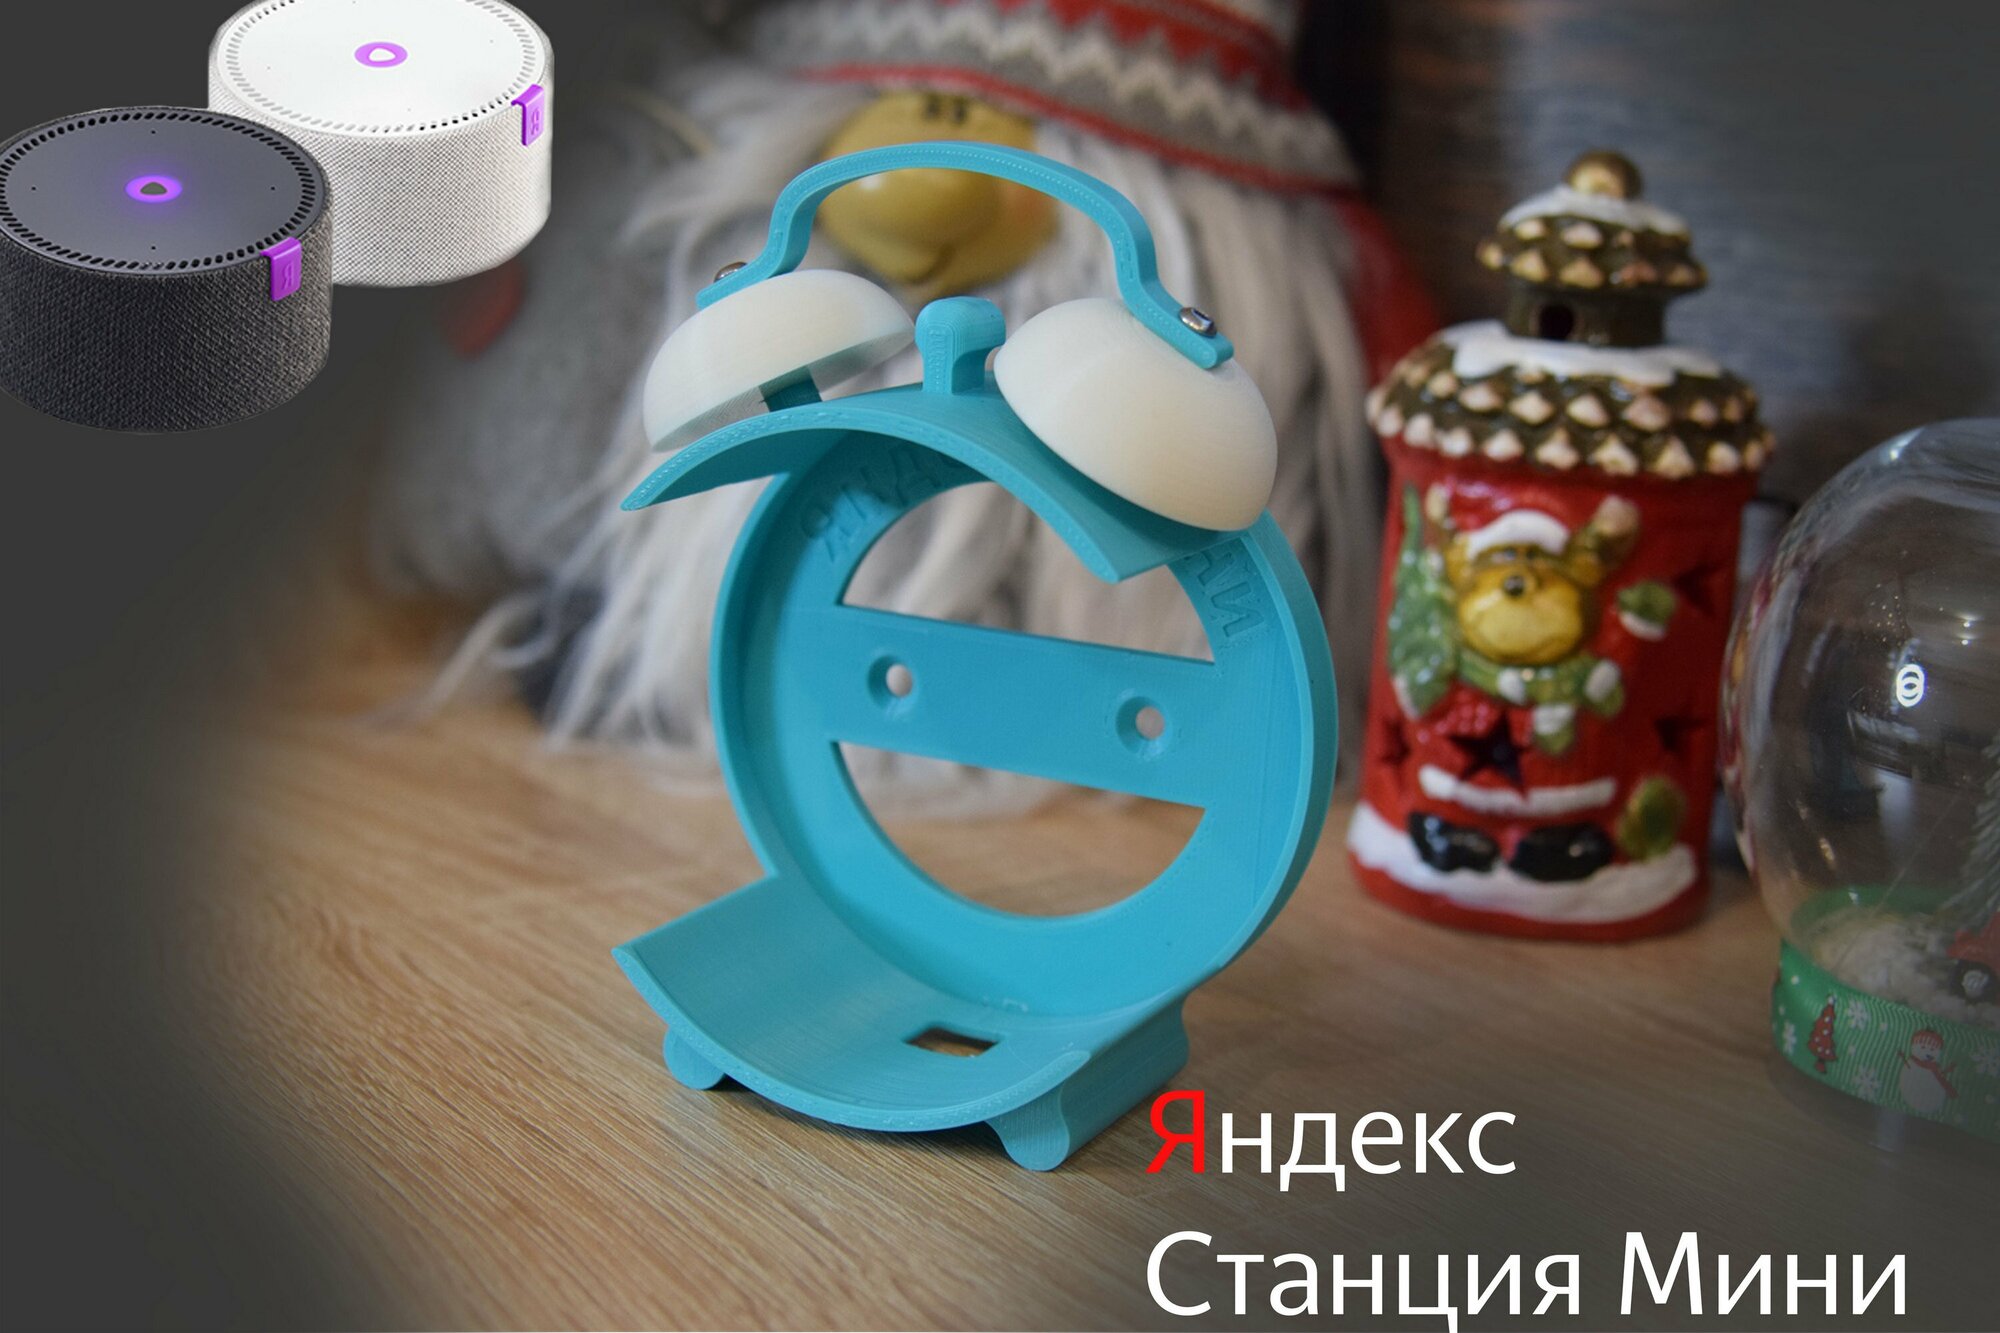 Подставка для Яндекс Cтанции Мини старая версия